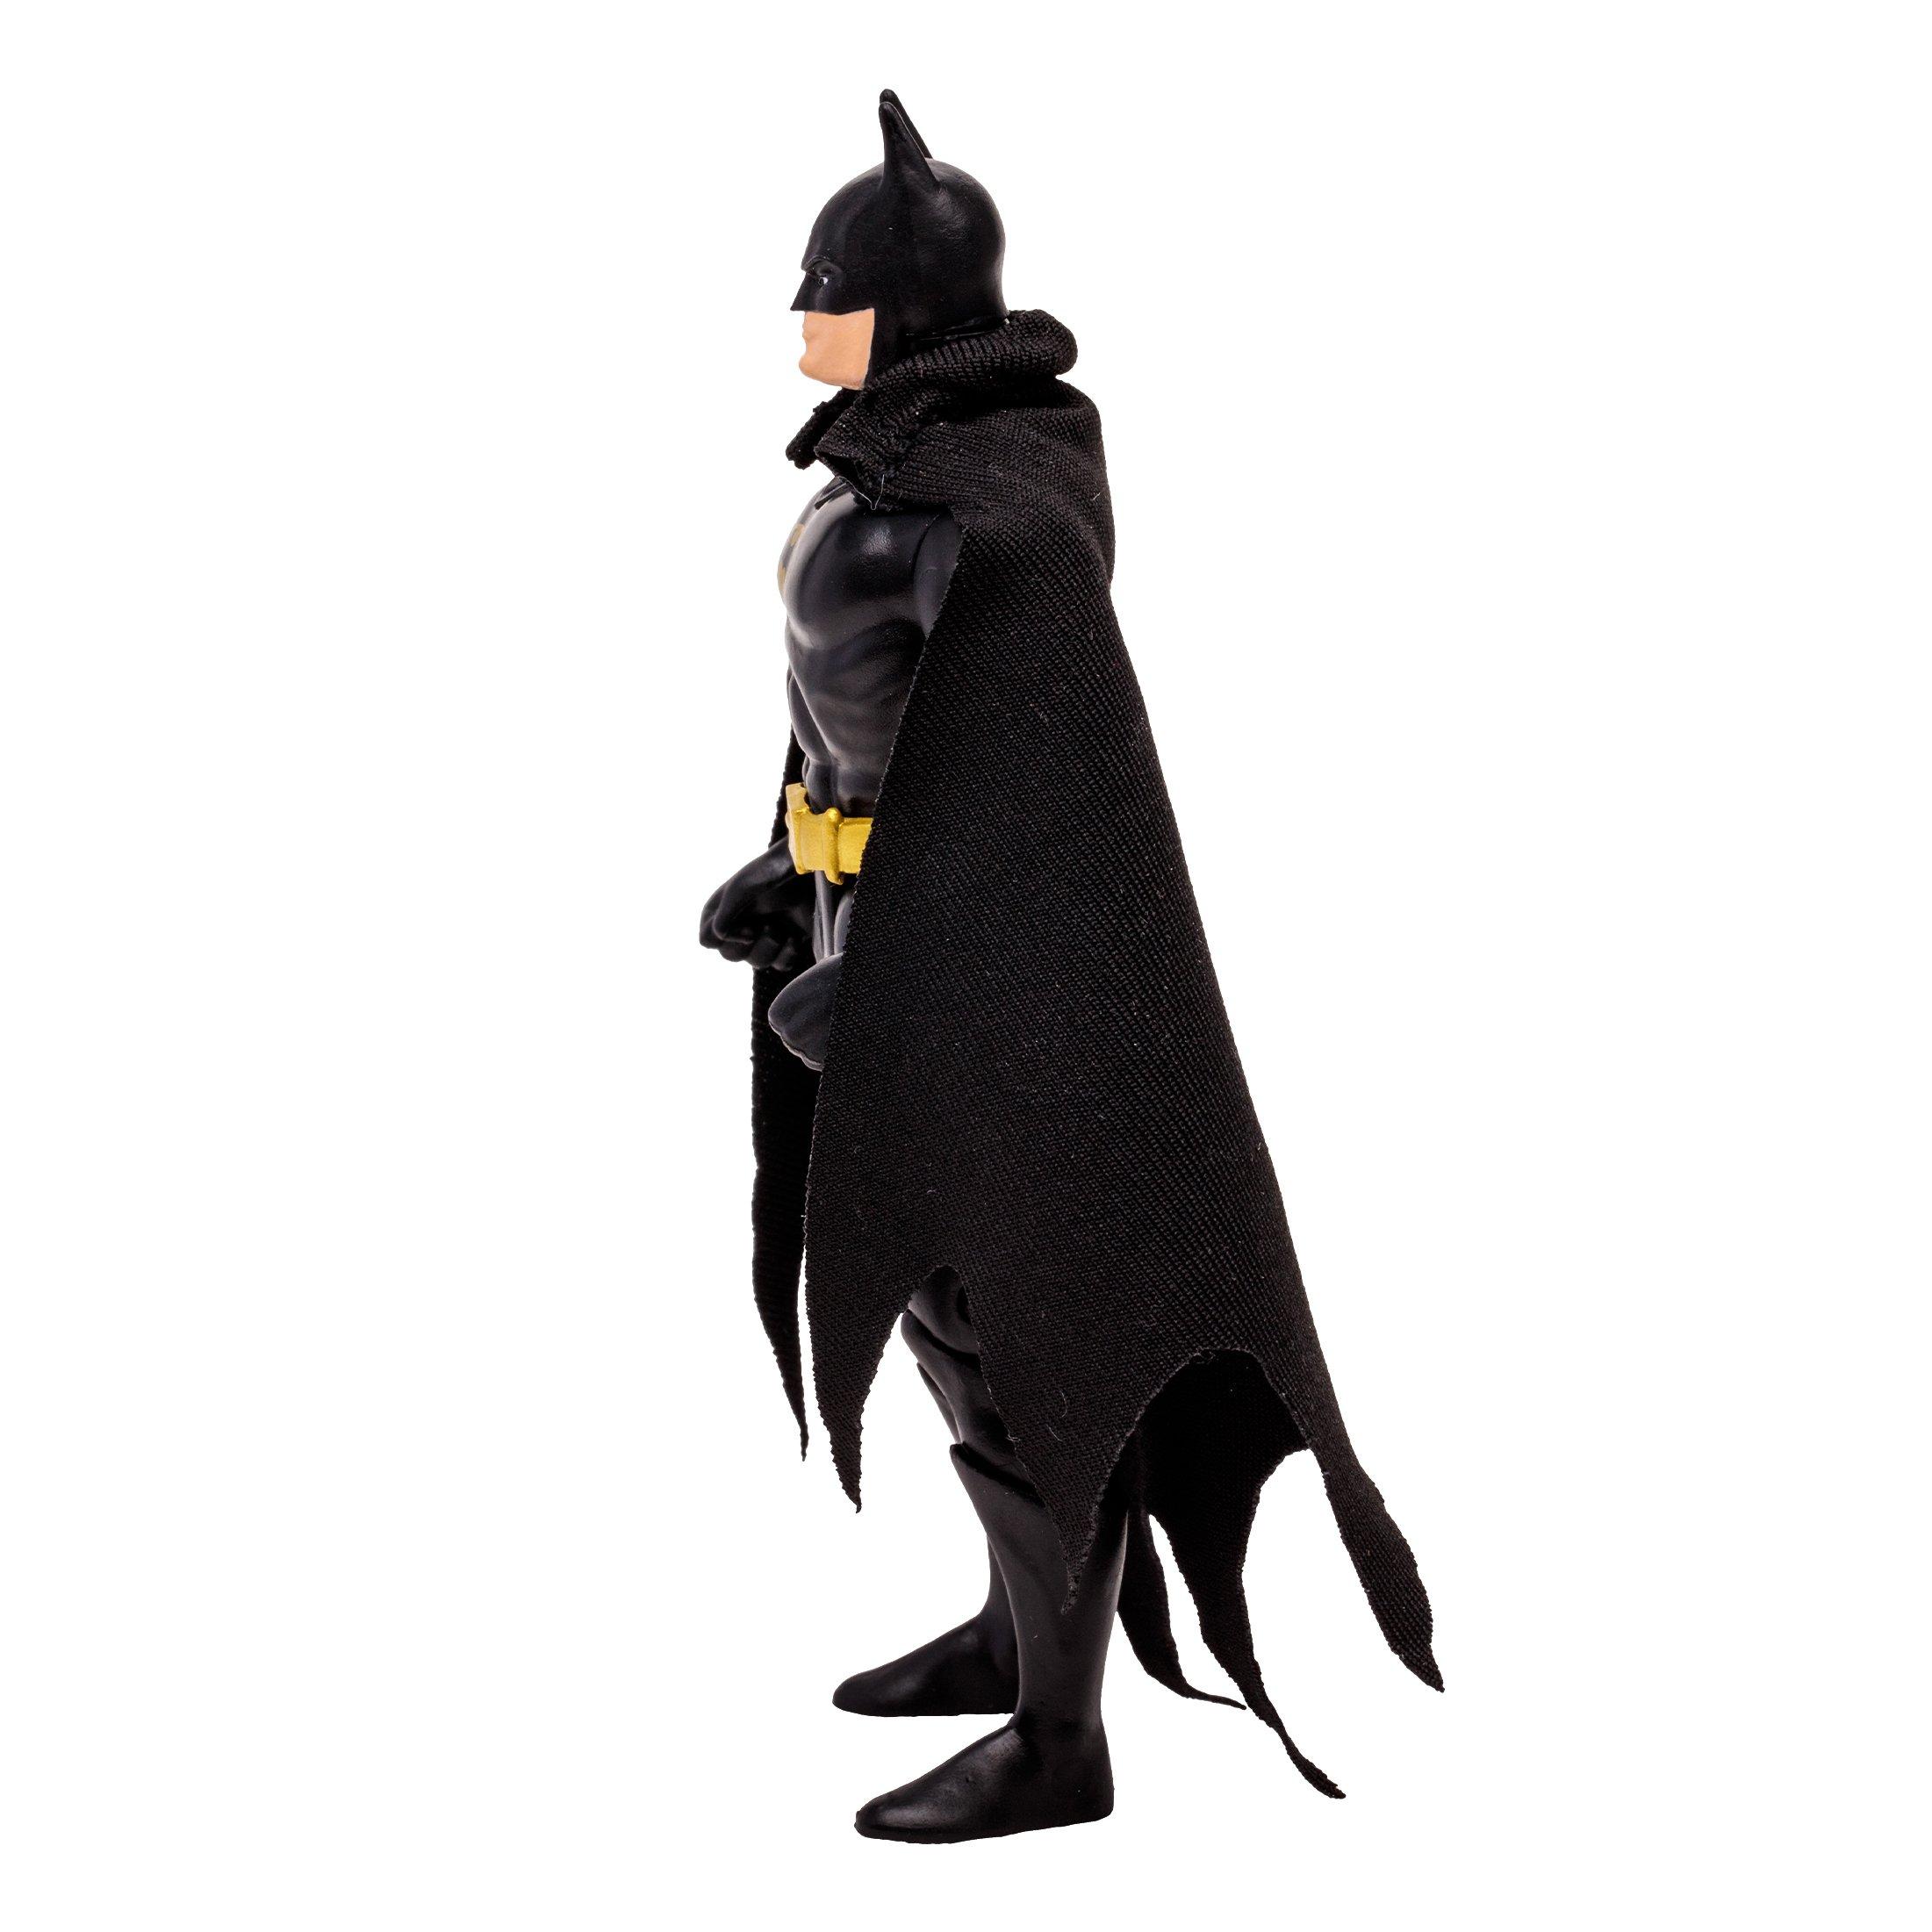 Batman 21: Guerra Das Sombras 3 de 4 - Reboot Comic Store